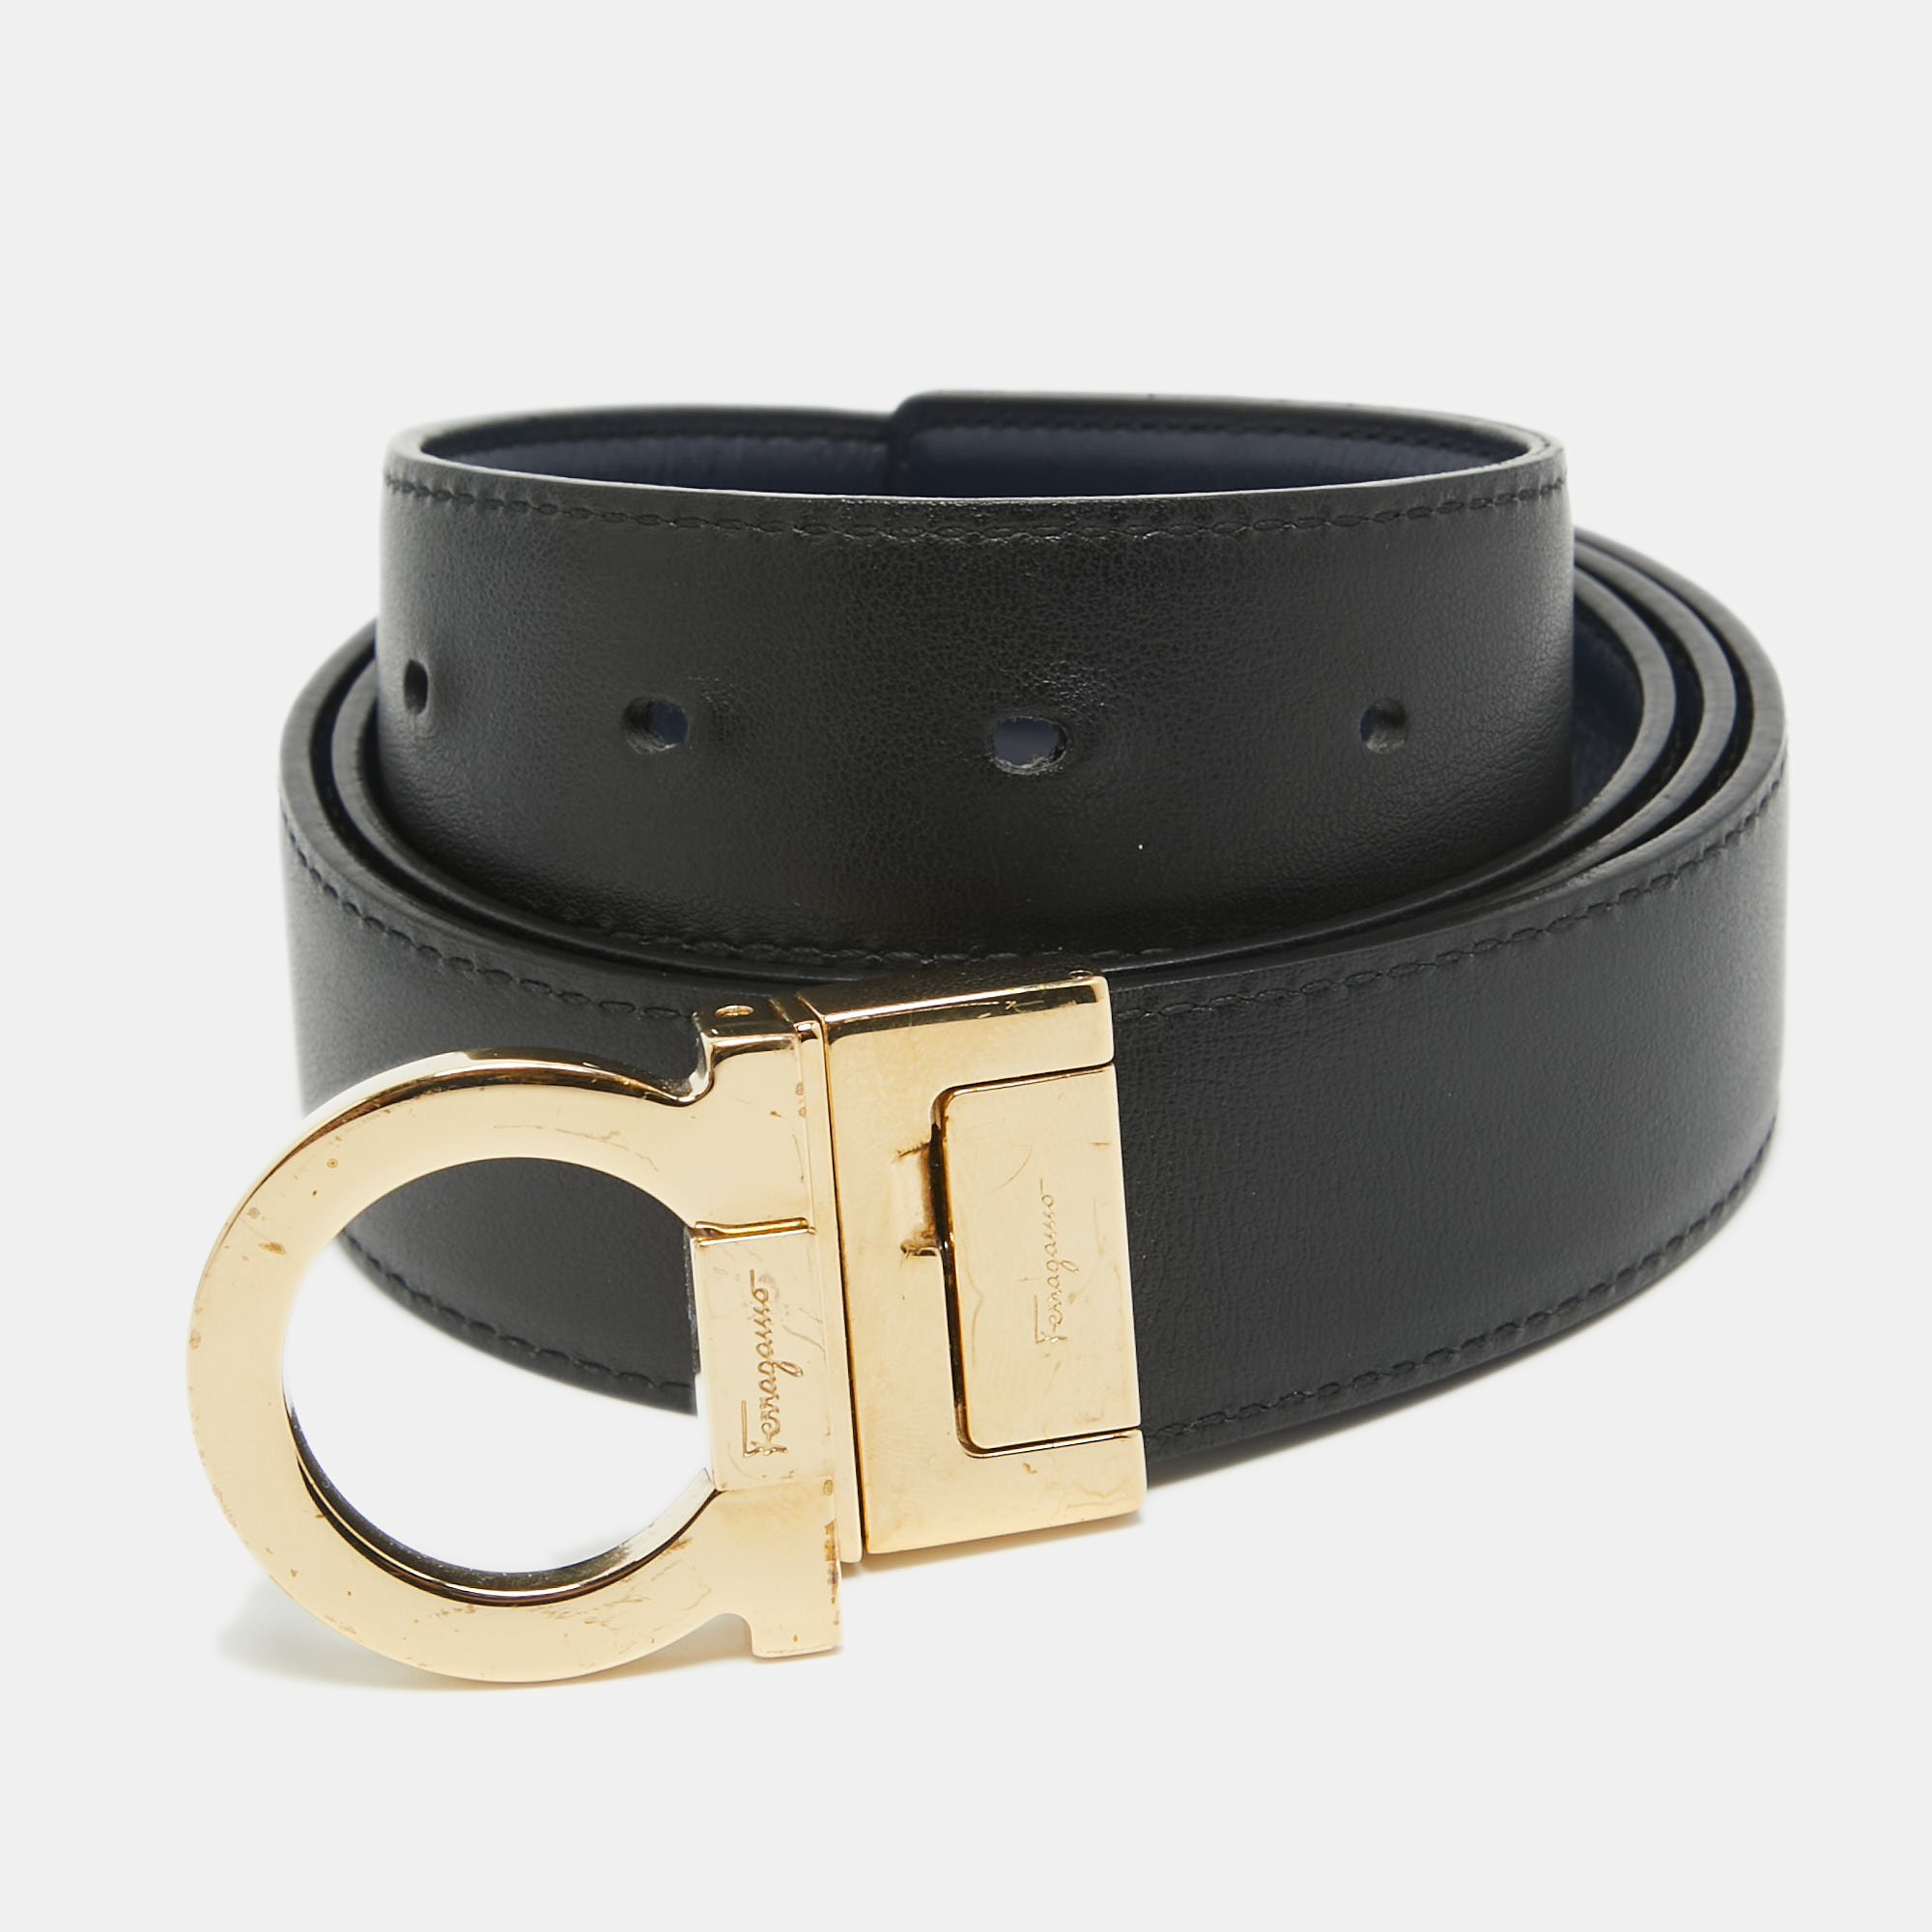 Salvatore ferragamo navy blue/black leather gancio cut to size reversible belt